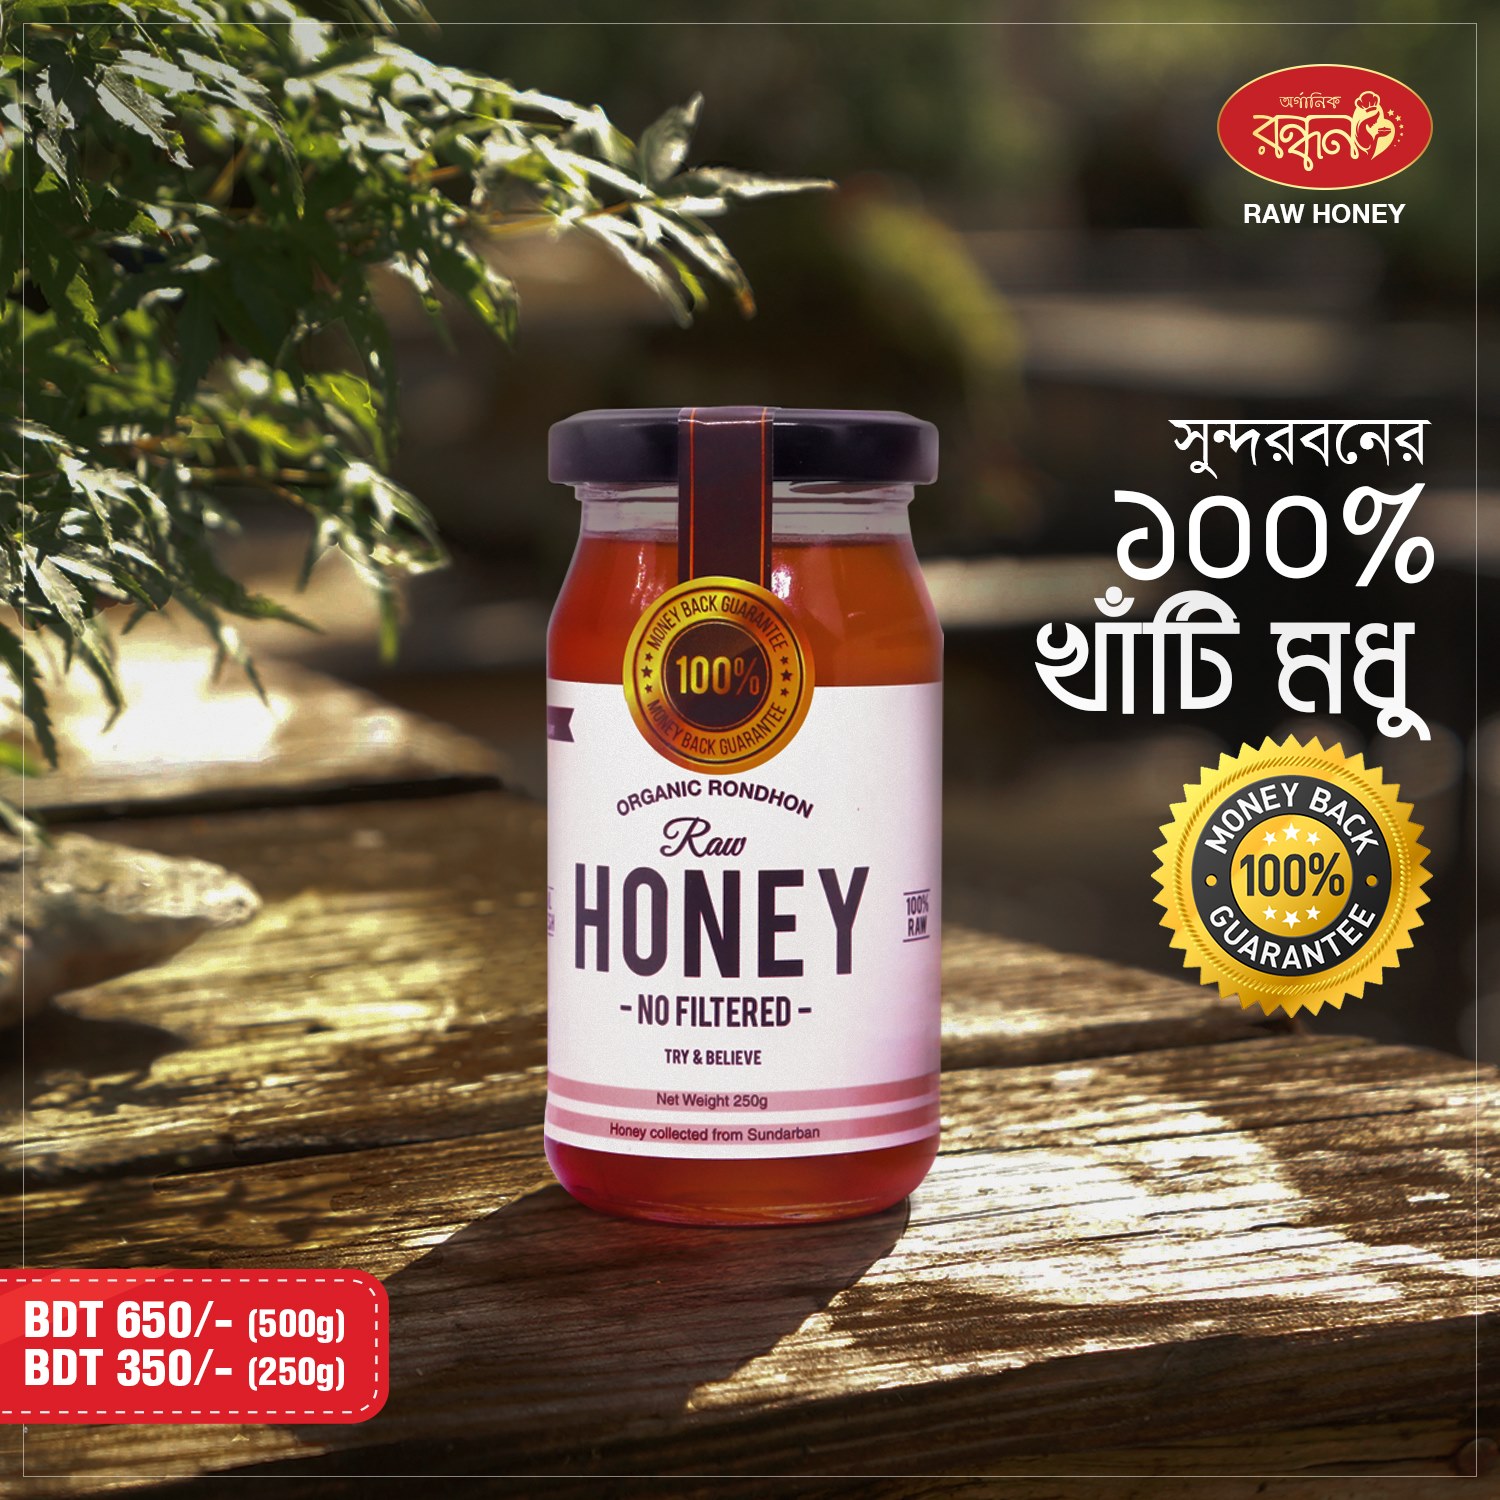 Organic Rondhon Raw Honey